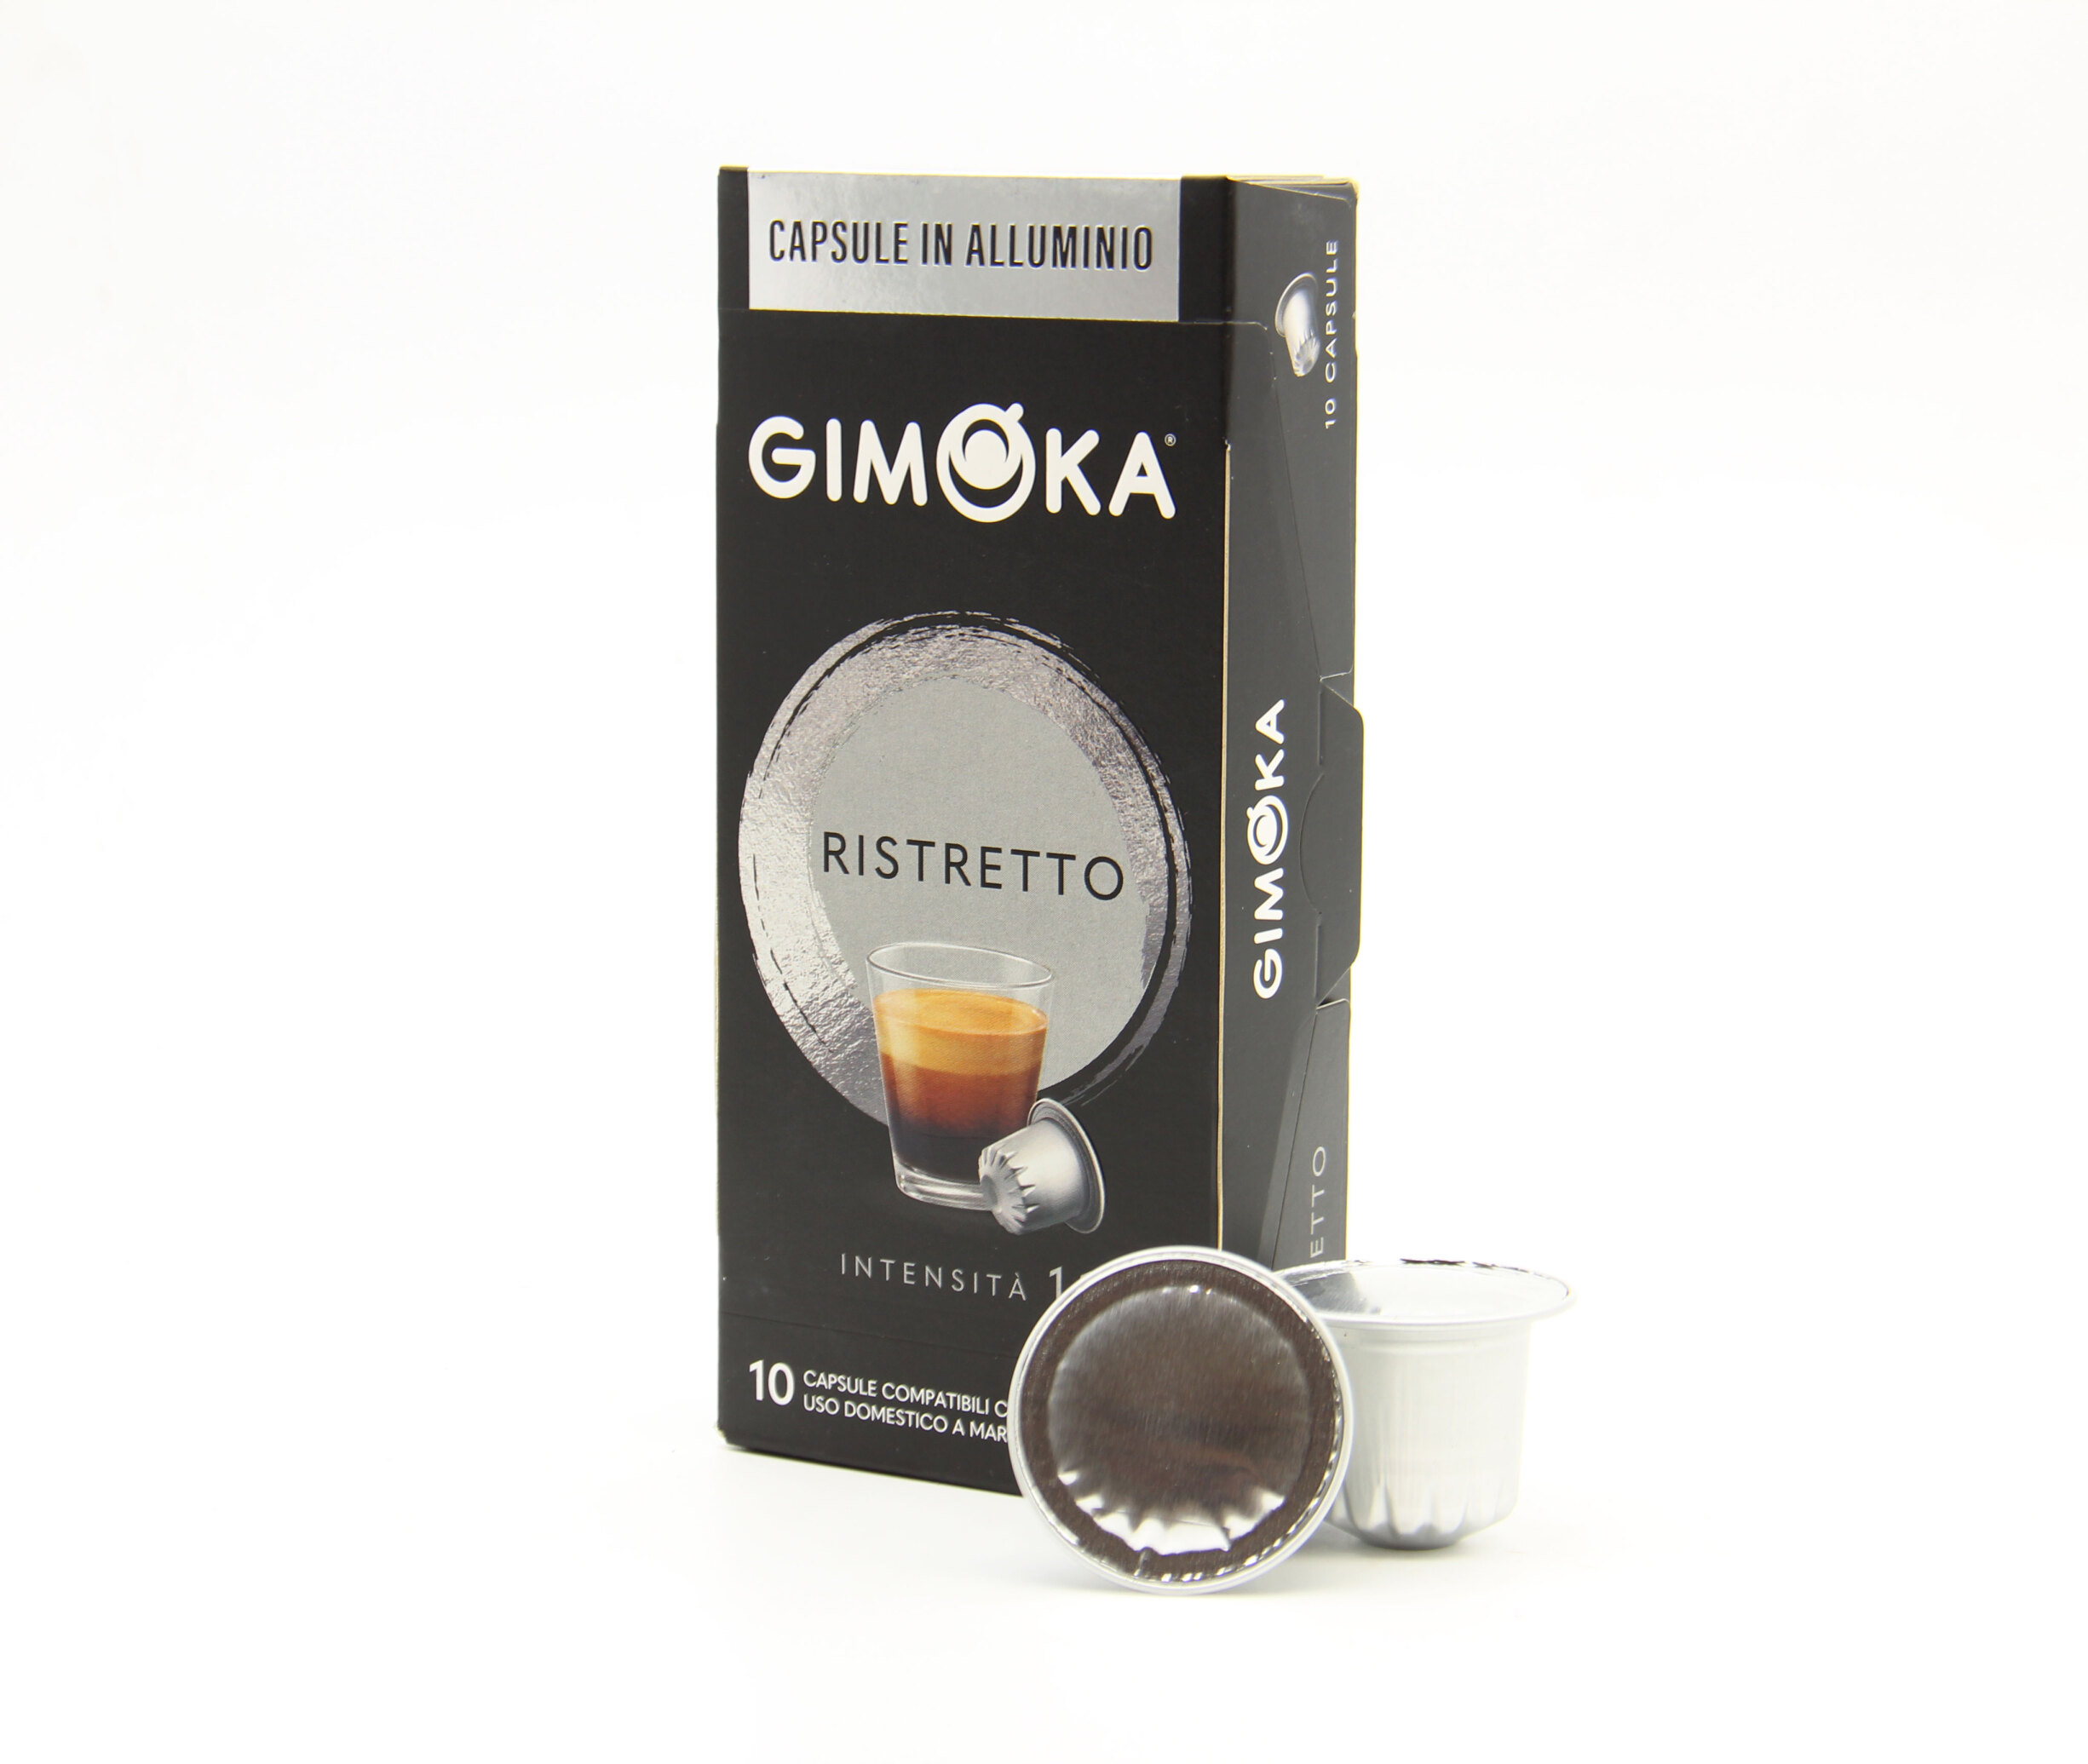  کپسول قهوه جیموکا ریسترتو | Gimoka Ristretto 